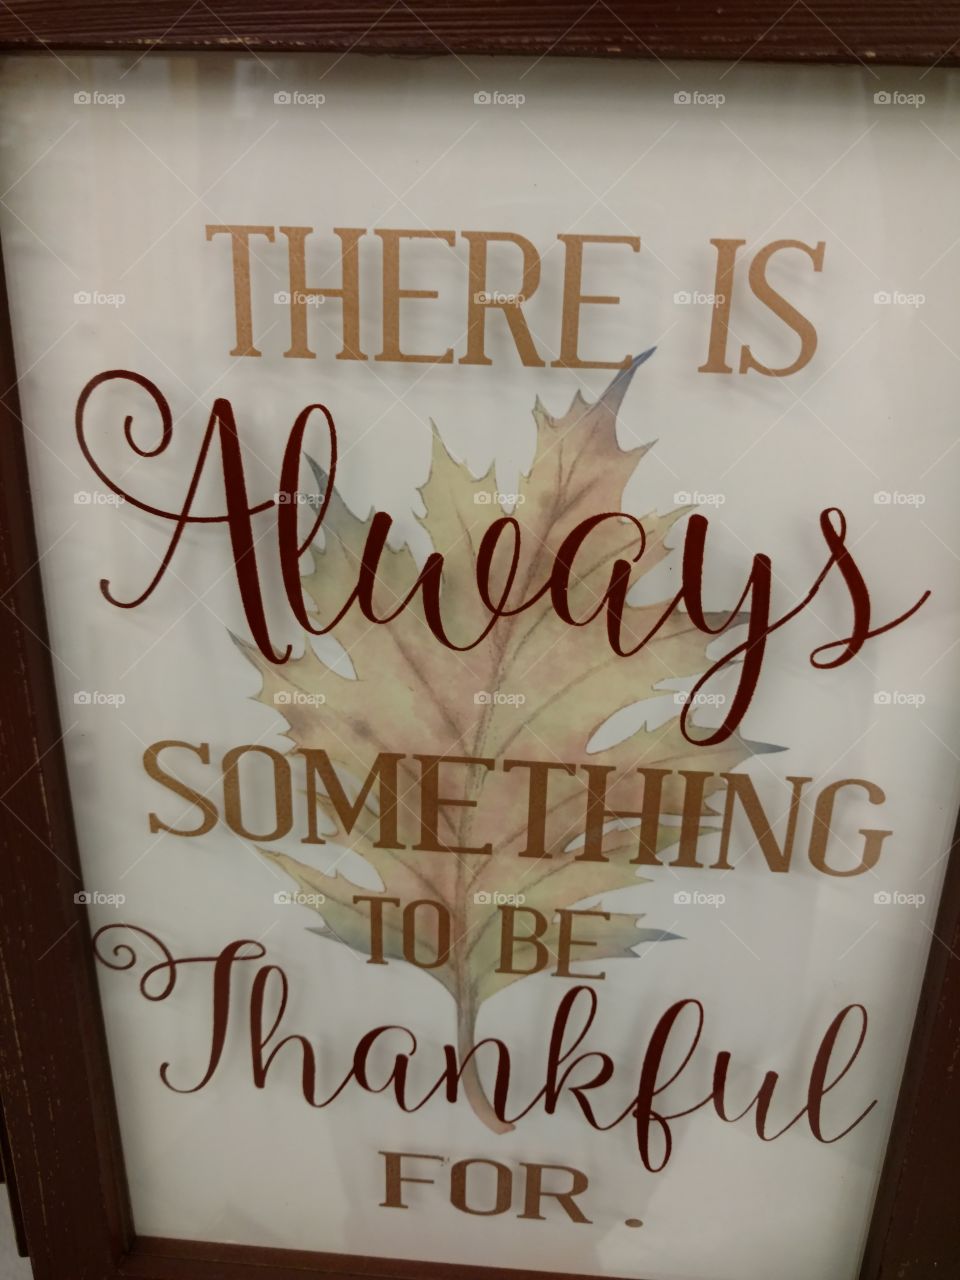 Being thankful